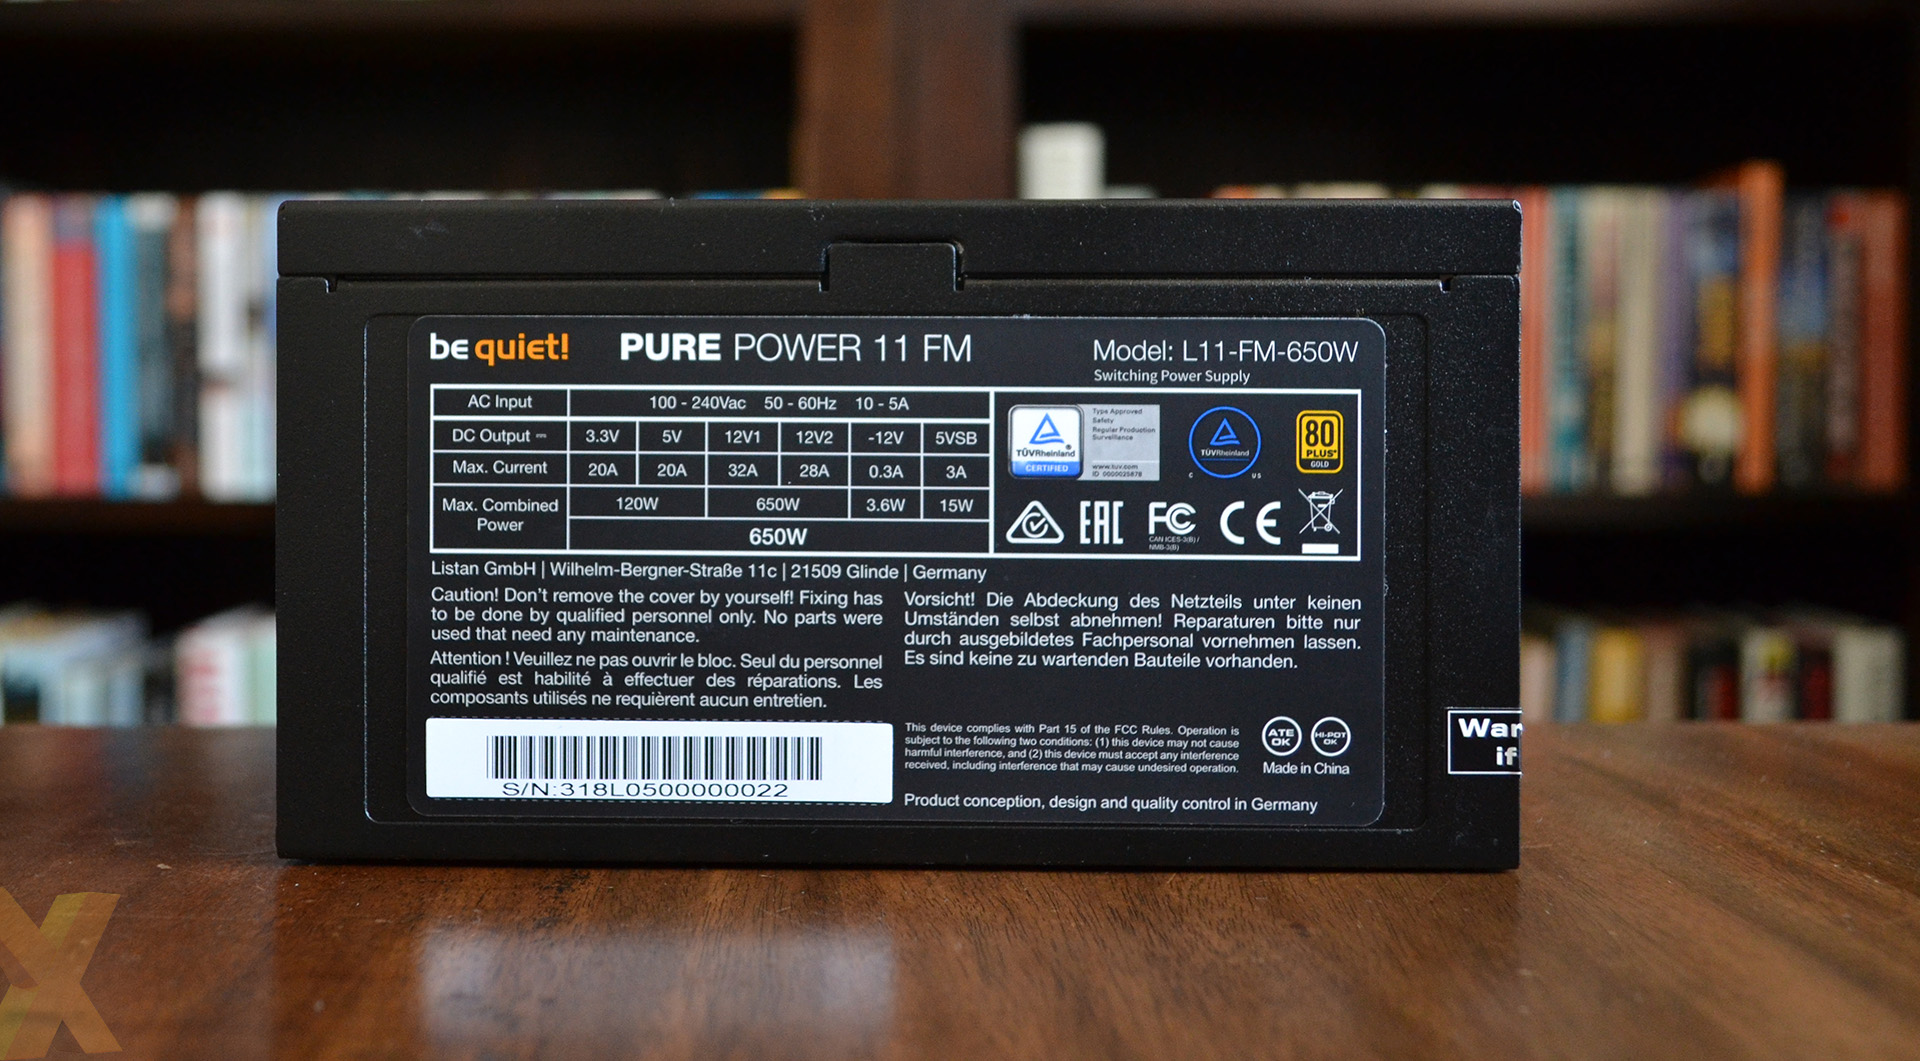 Review: be quiet Pure Power 11 FM (650W) - PSU - HEXUS.net